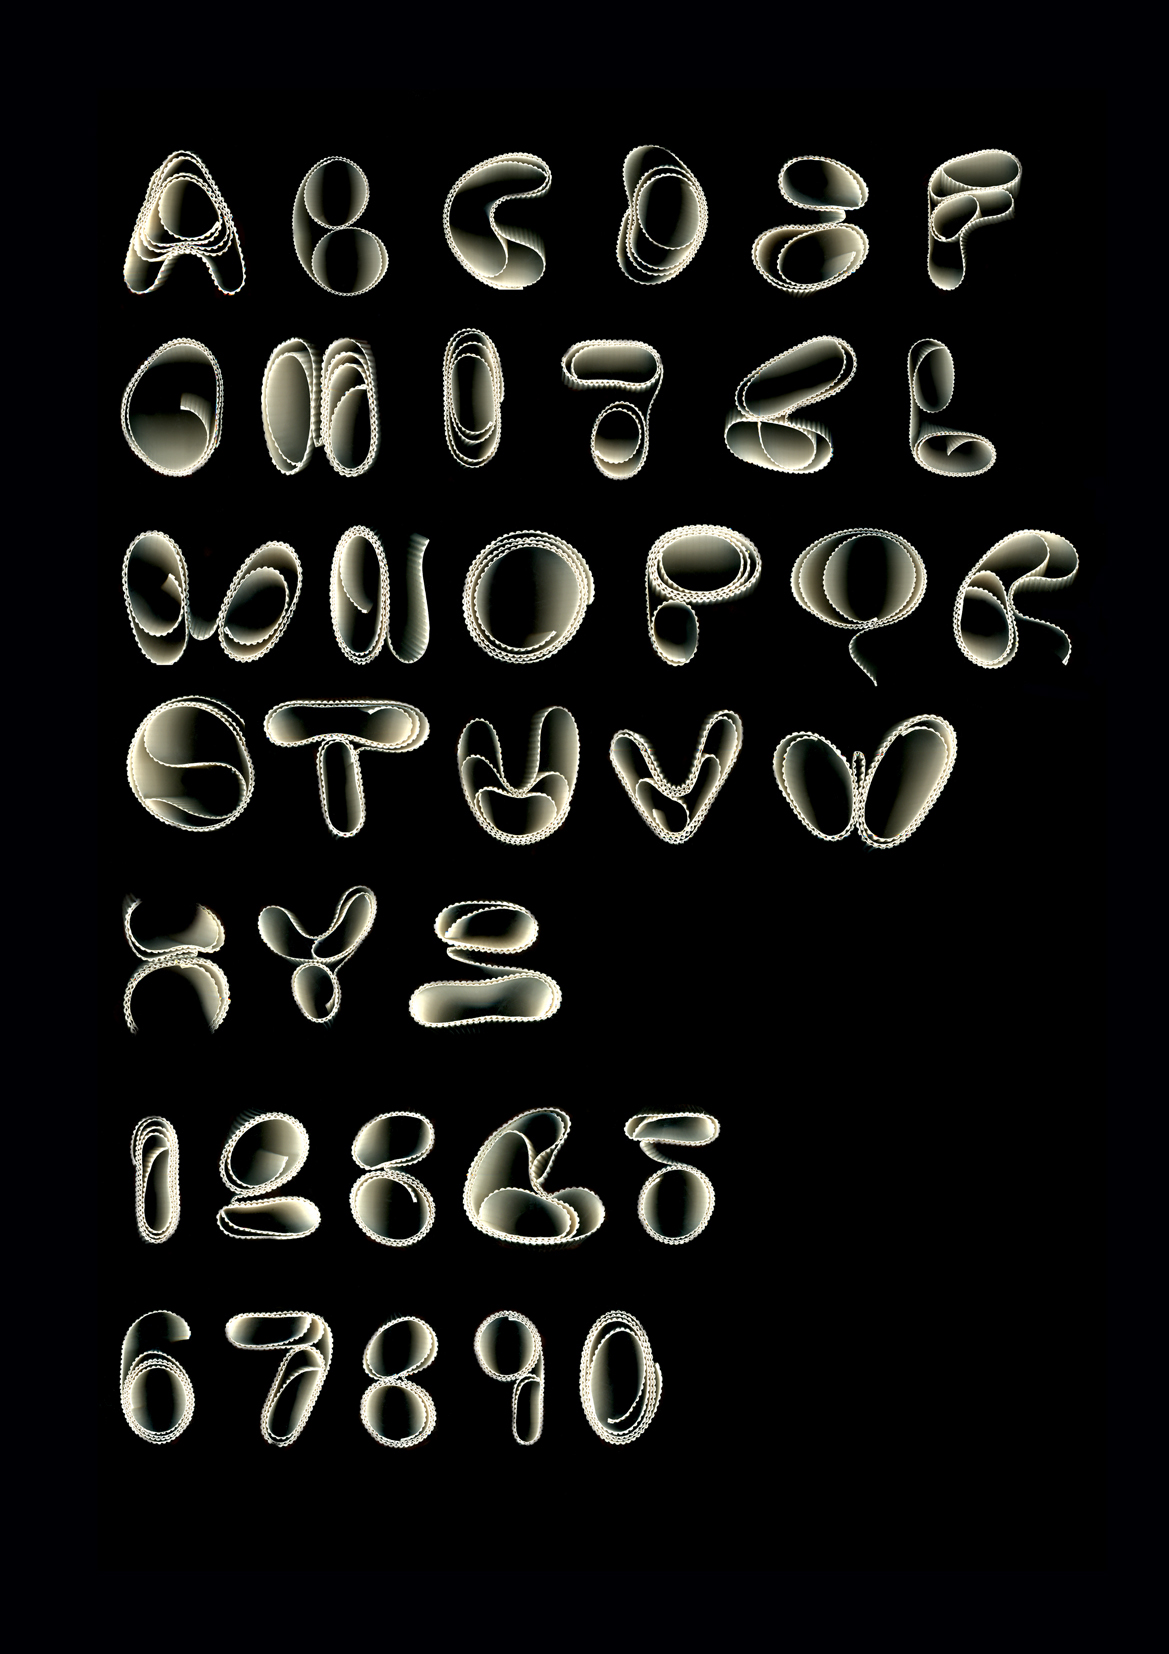 Adobe Portfolio font type paper scanner light chaneled Tyography